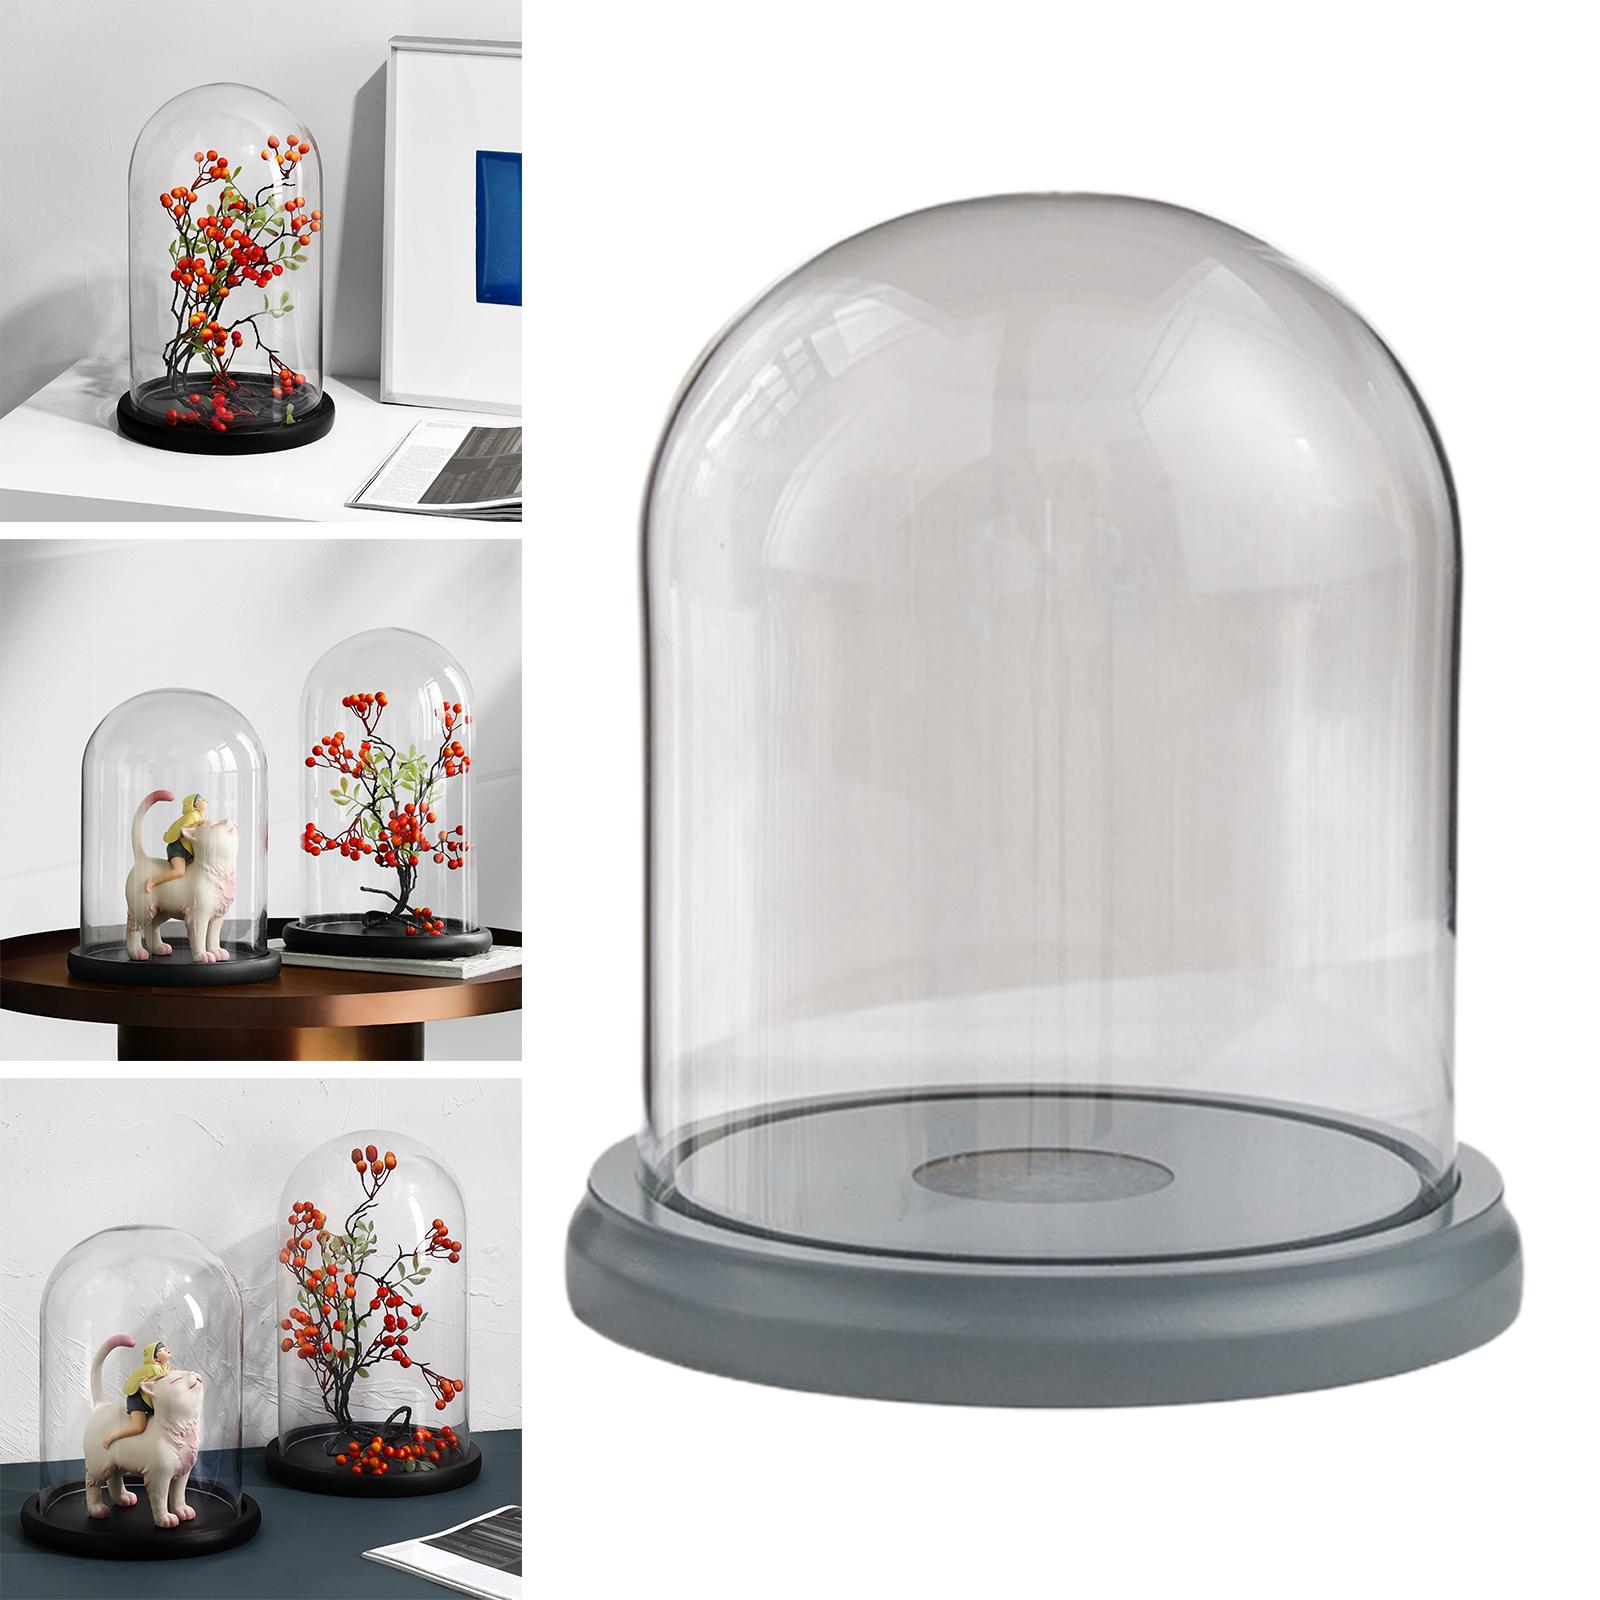 Decorative Clear Glass Dome Tabletop Decor Showcase Cover for Countertops B